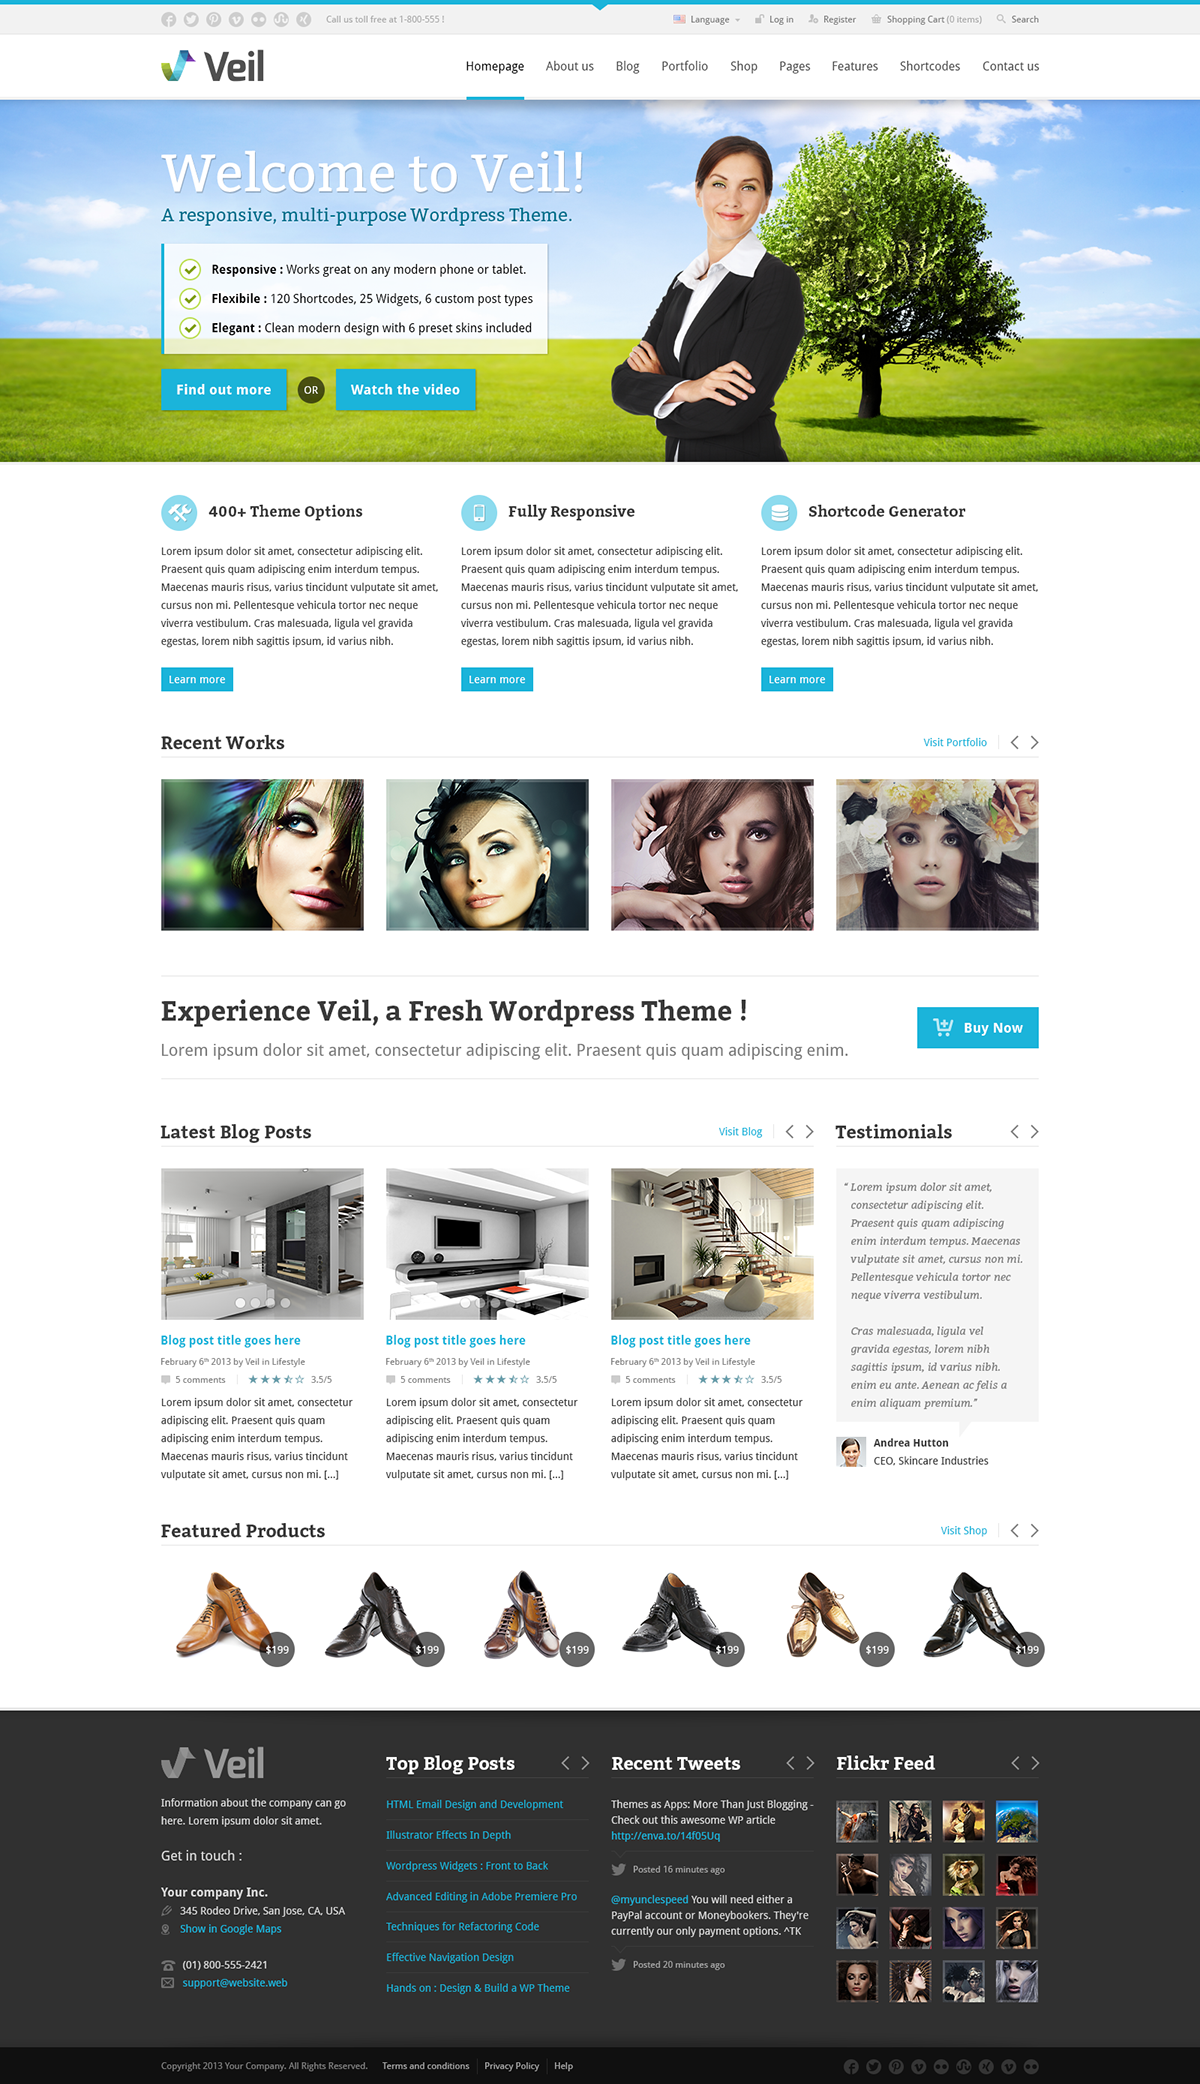 wp wordpress Theme cms commercial envato Multipurpose UI ux user interface design User Experience Design store Ecommerce forum social